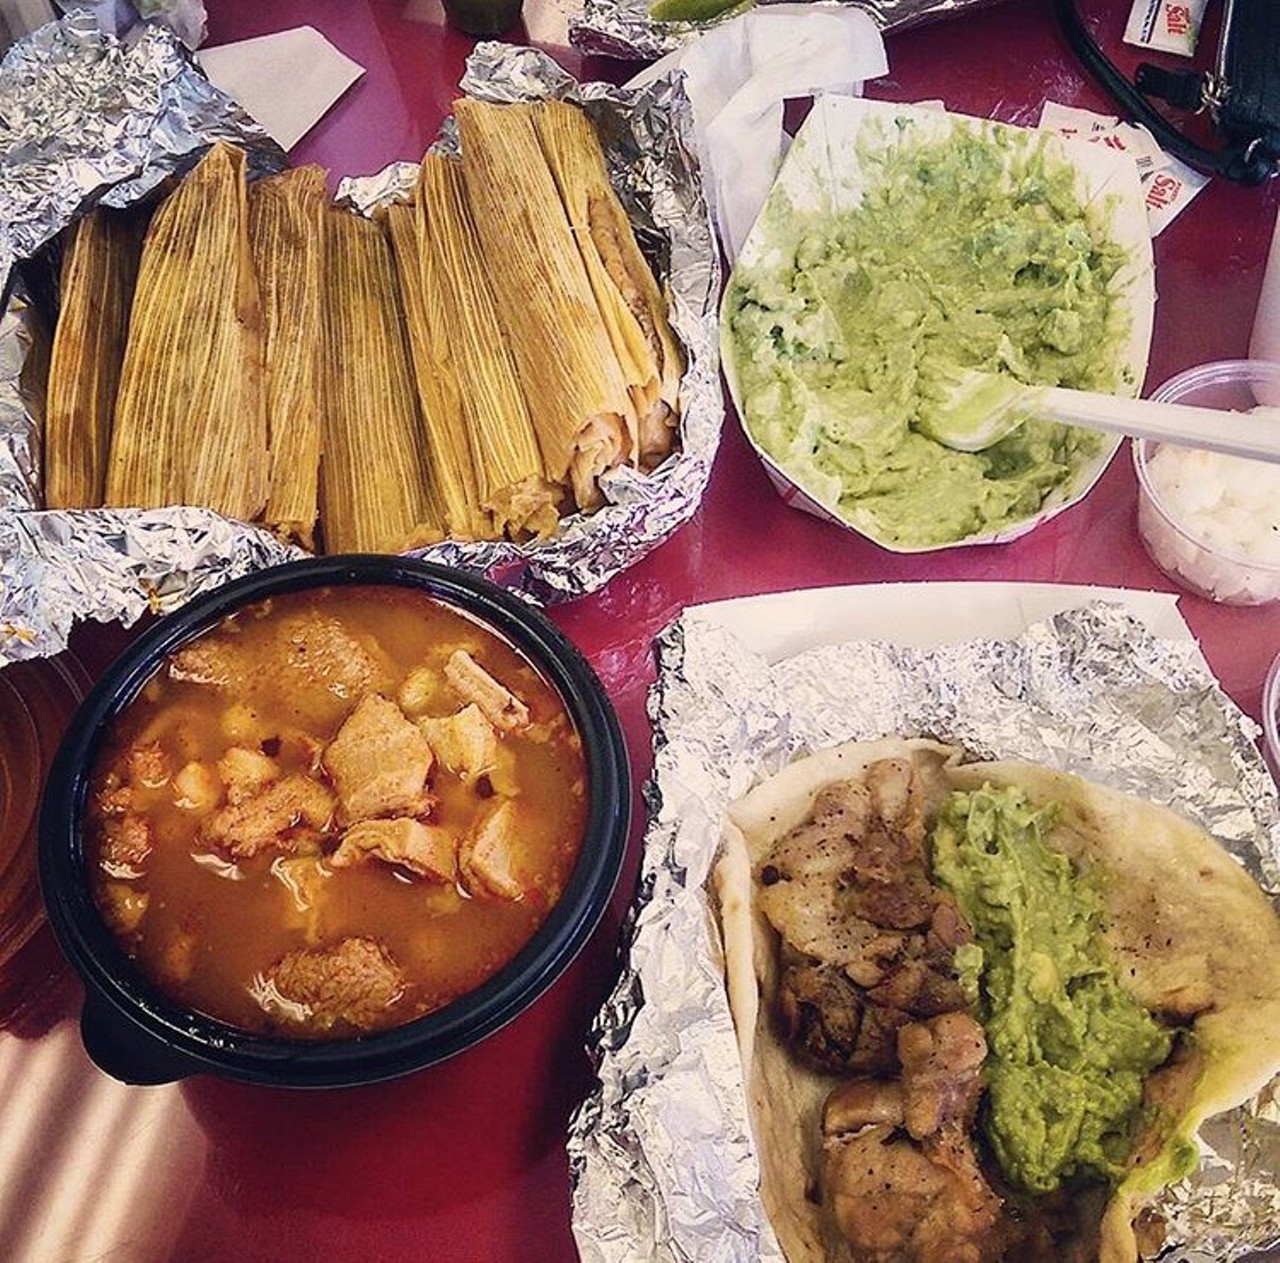 Best Tamales
Tellez Tamales & Barbacoa, multiple locations, (210) 433-1367, facebook.com
Photo via Instagram / rg_coupe